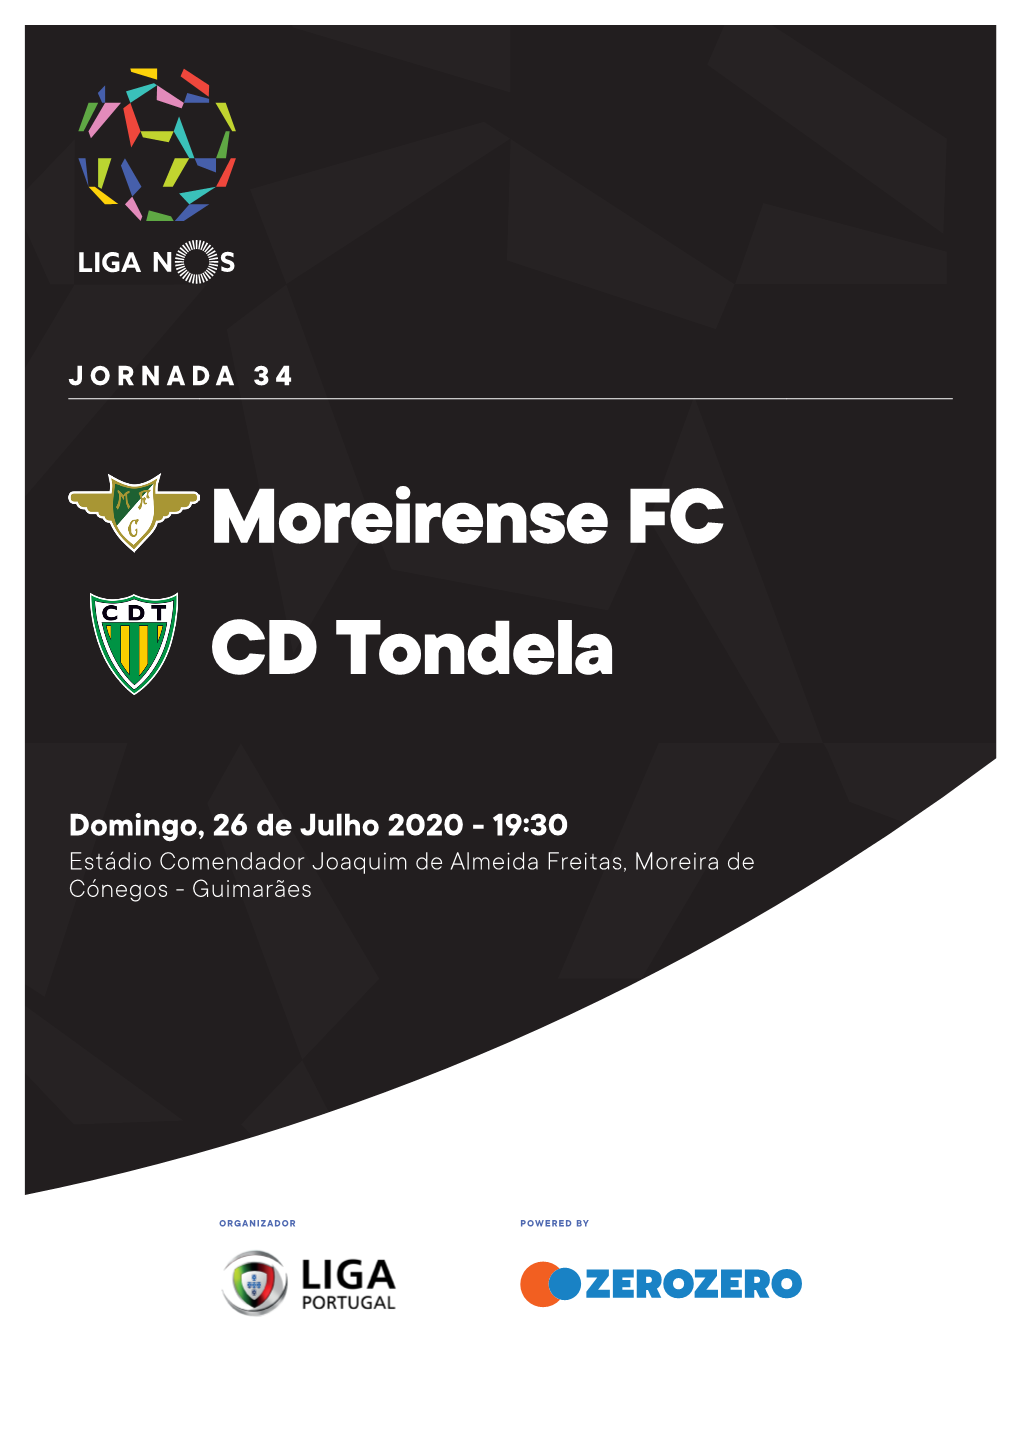 Moreirense FC CD Tondela